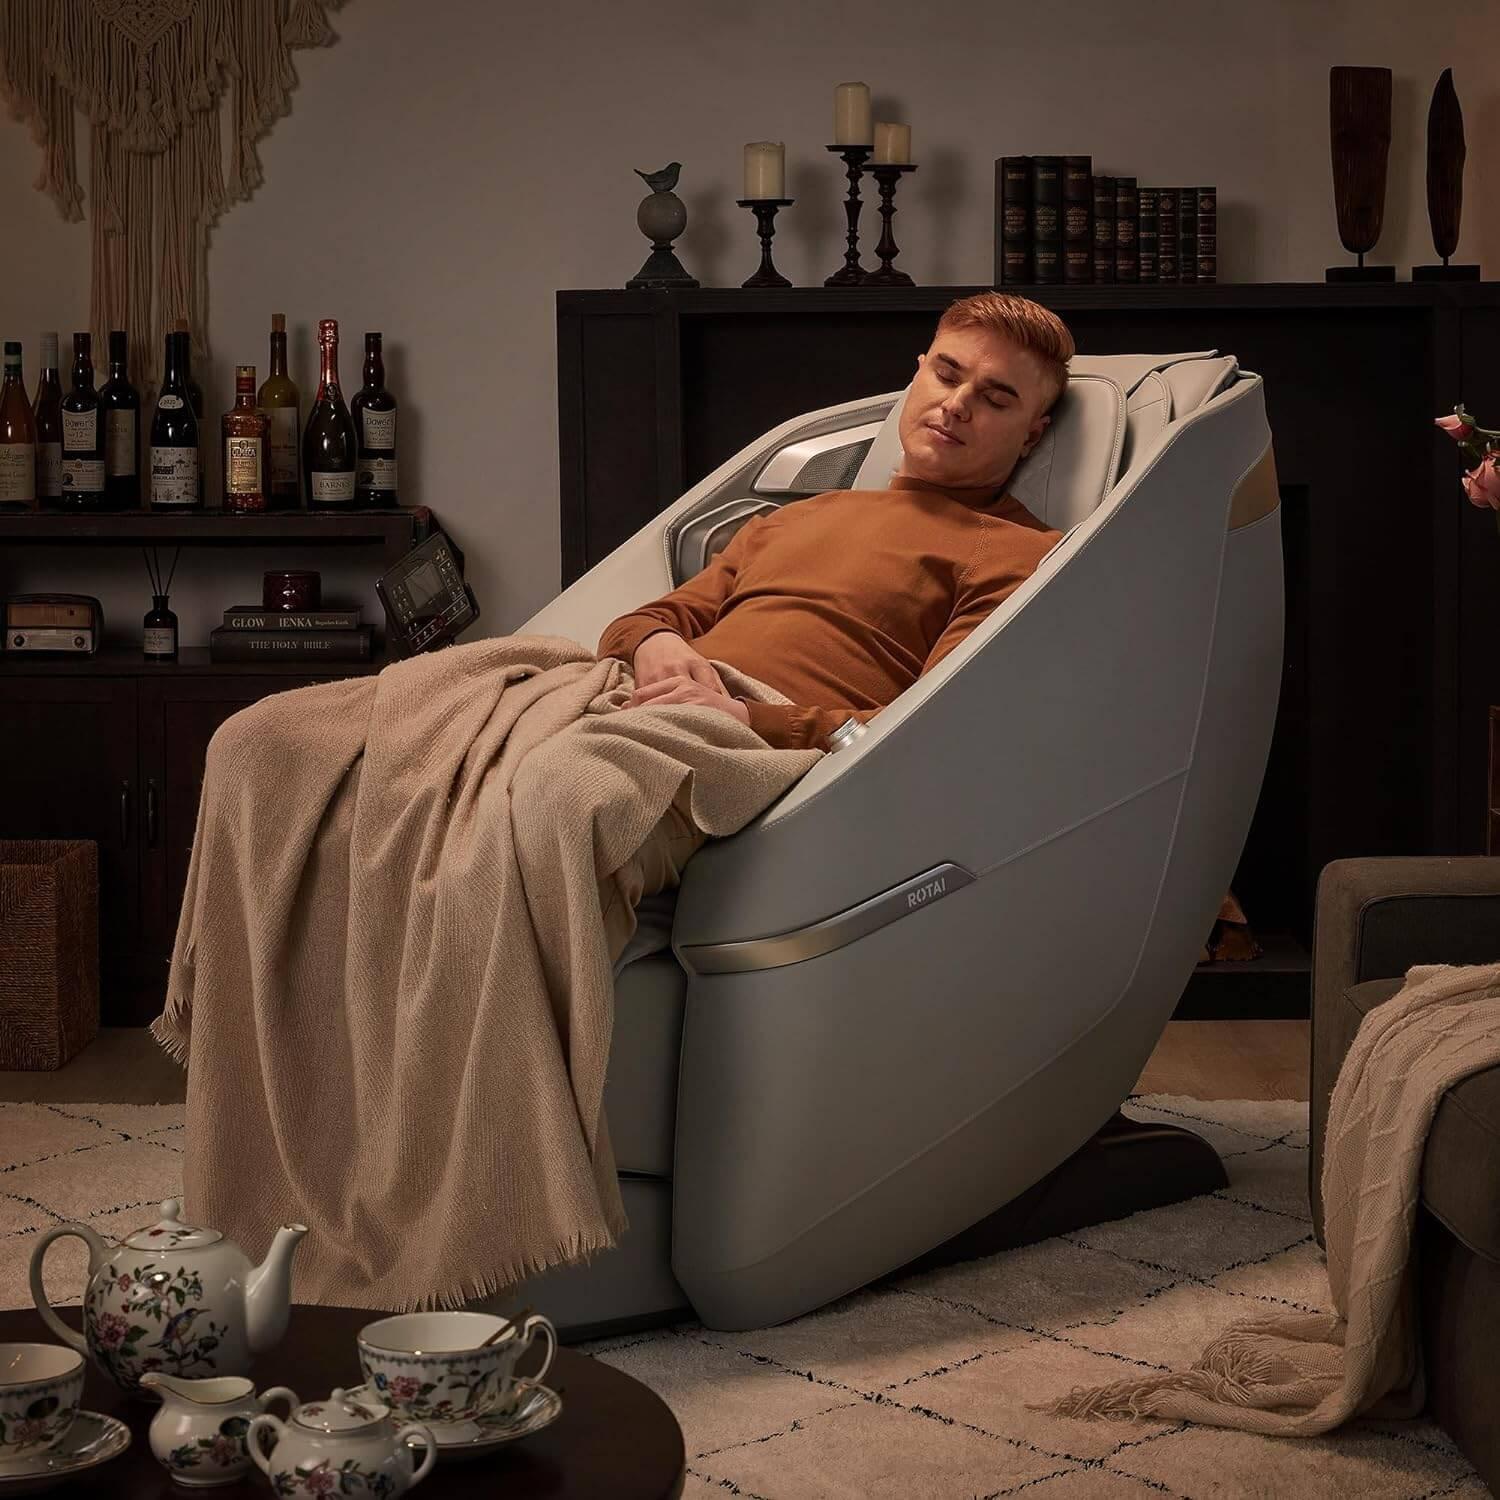 Ekanite Massage Chair - Dubai, UAE, Saudi, Best Massage Chair in UAE, Massage Chair, massage chair for home, massage chair